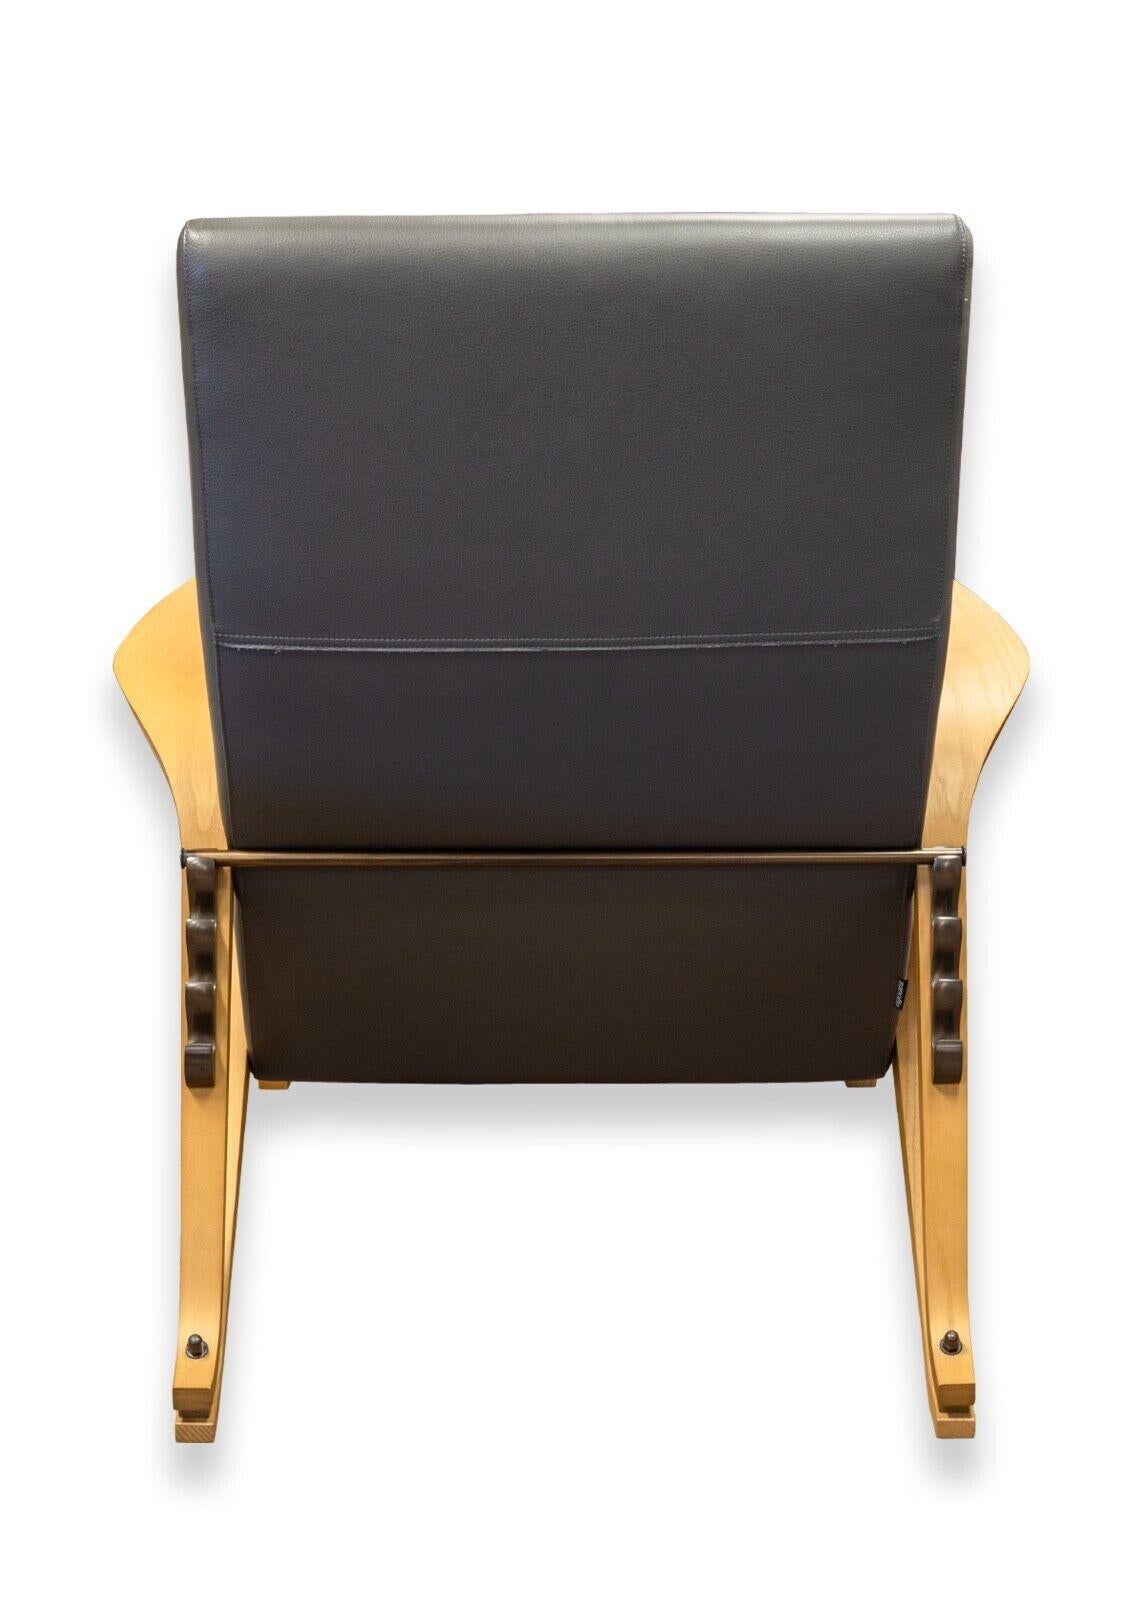 Carlo Mollino Contemporary Modern Gilda Grey Leather Lounge Chair by Zanotta 1